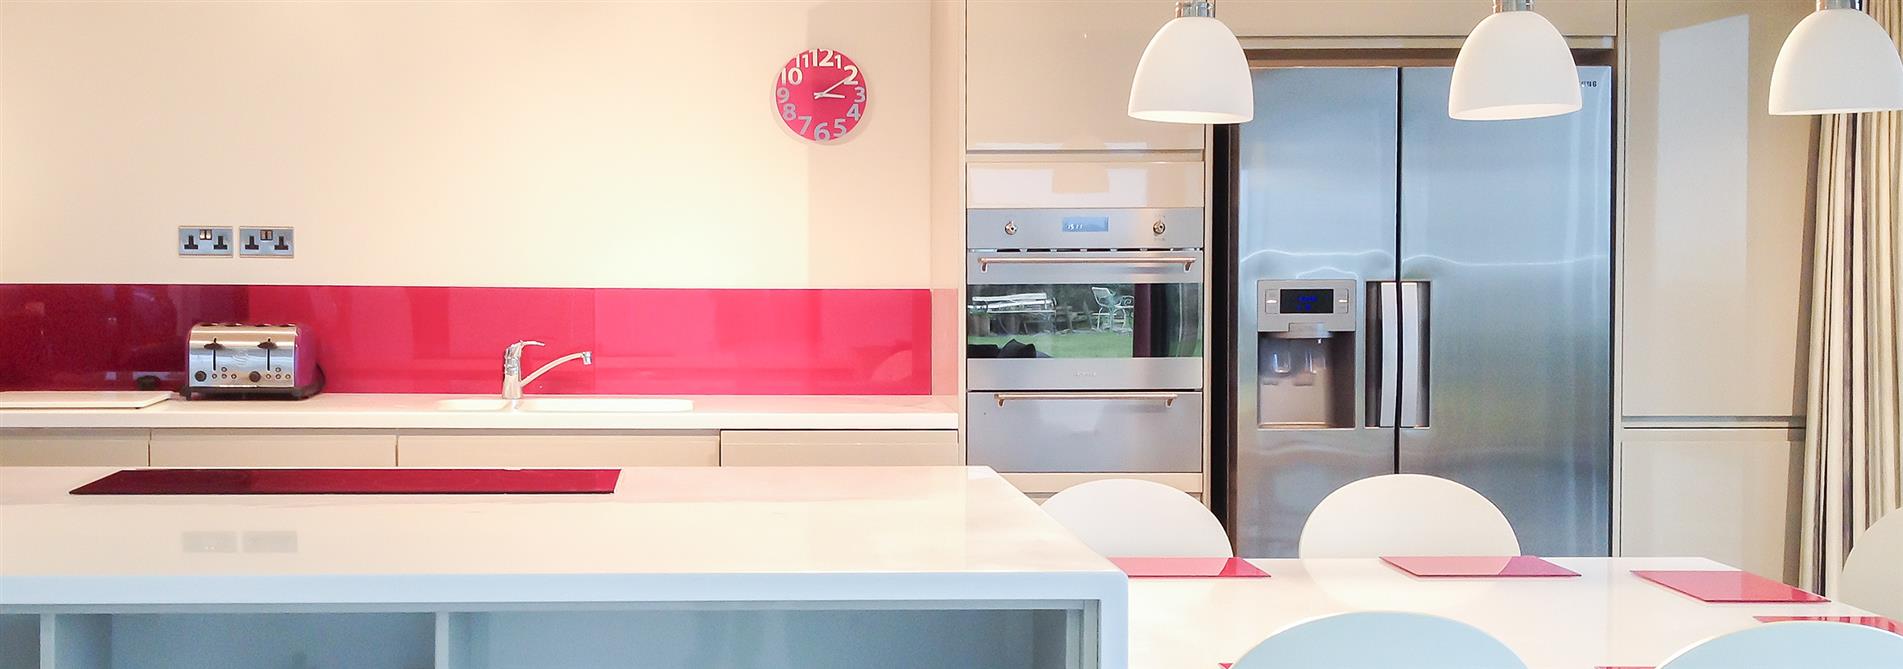 Kitchen with pink glass splashback